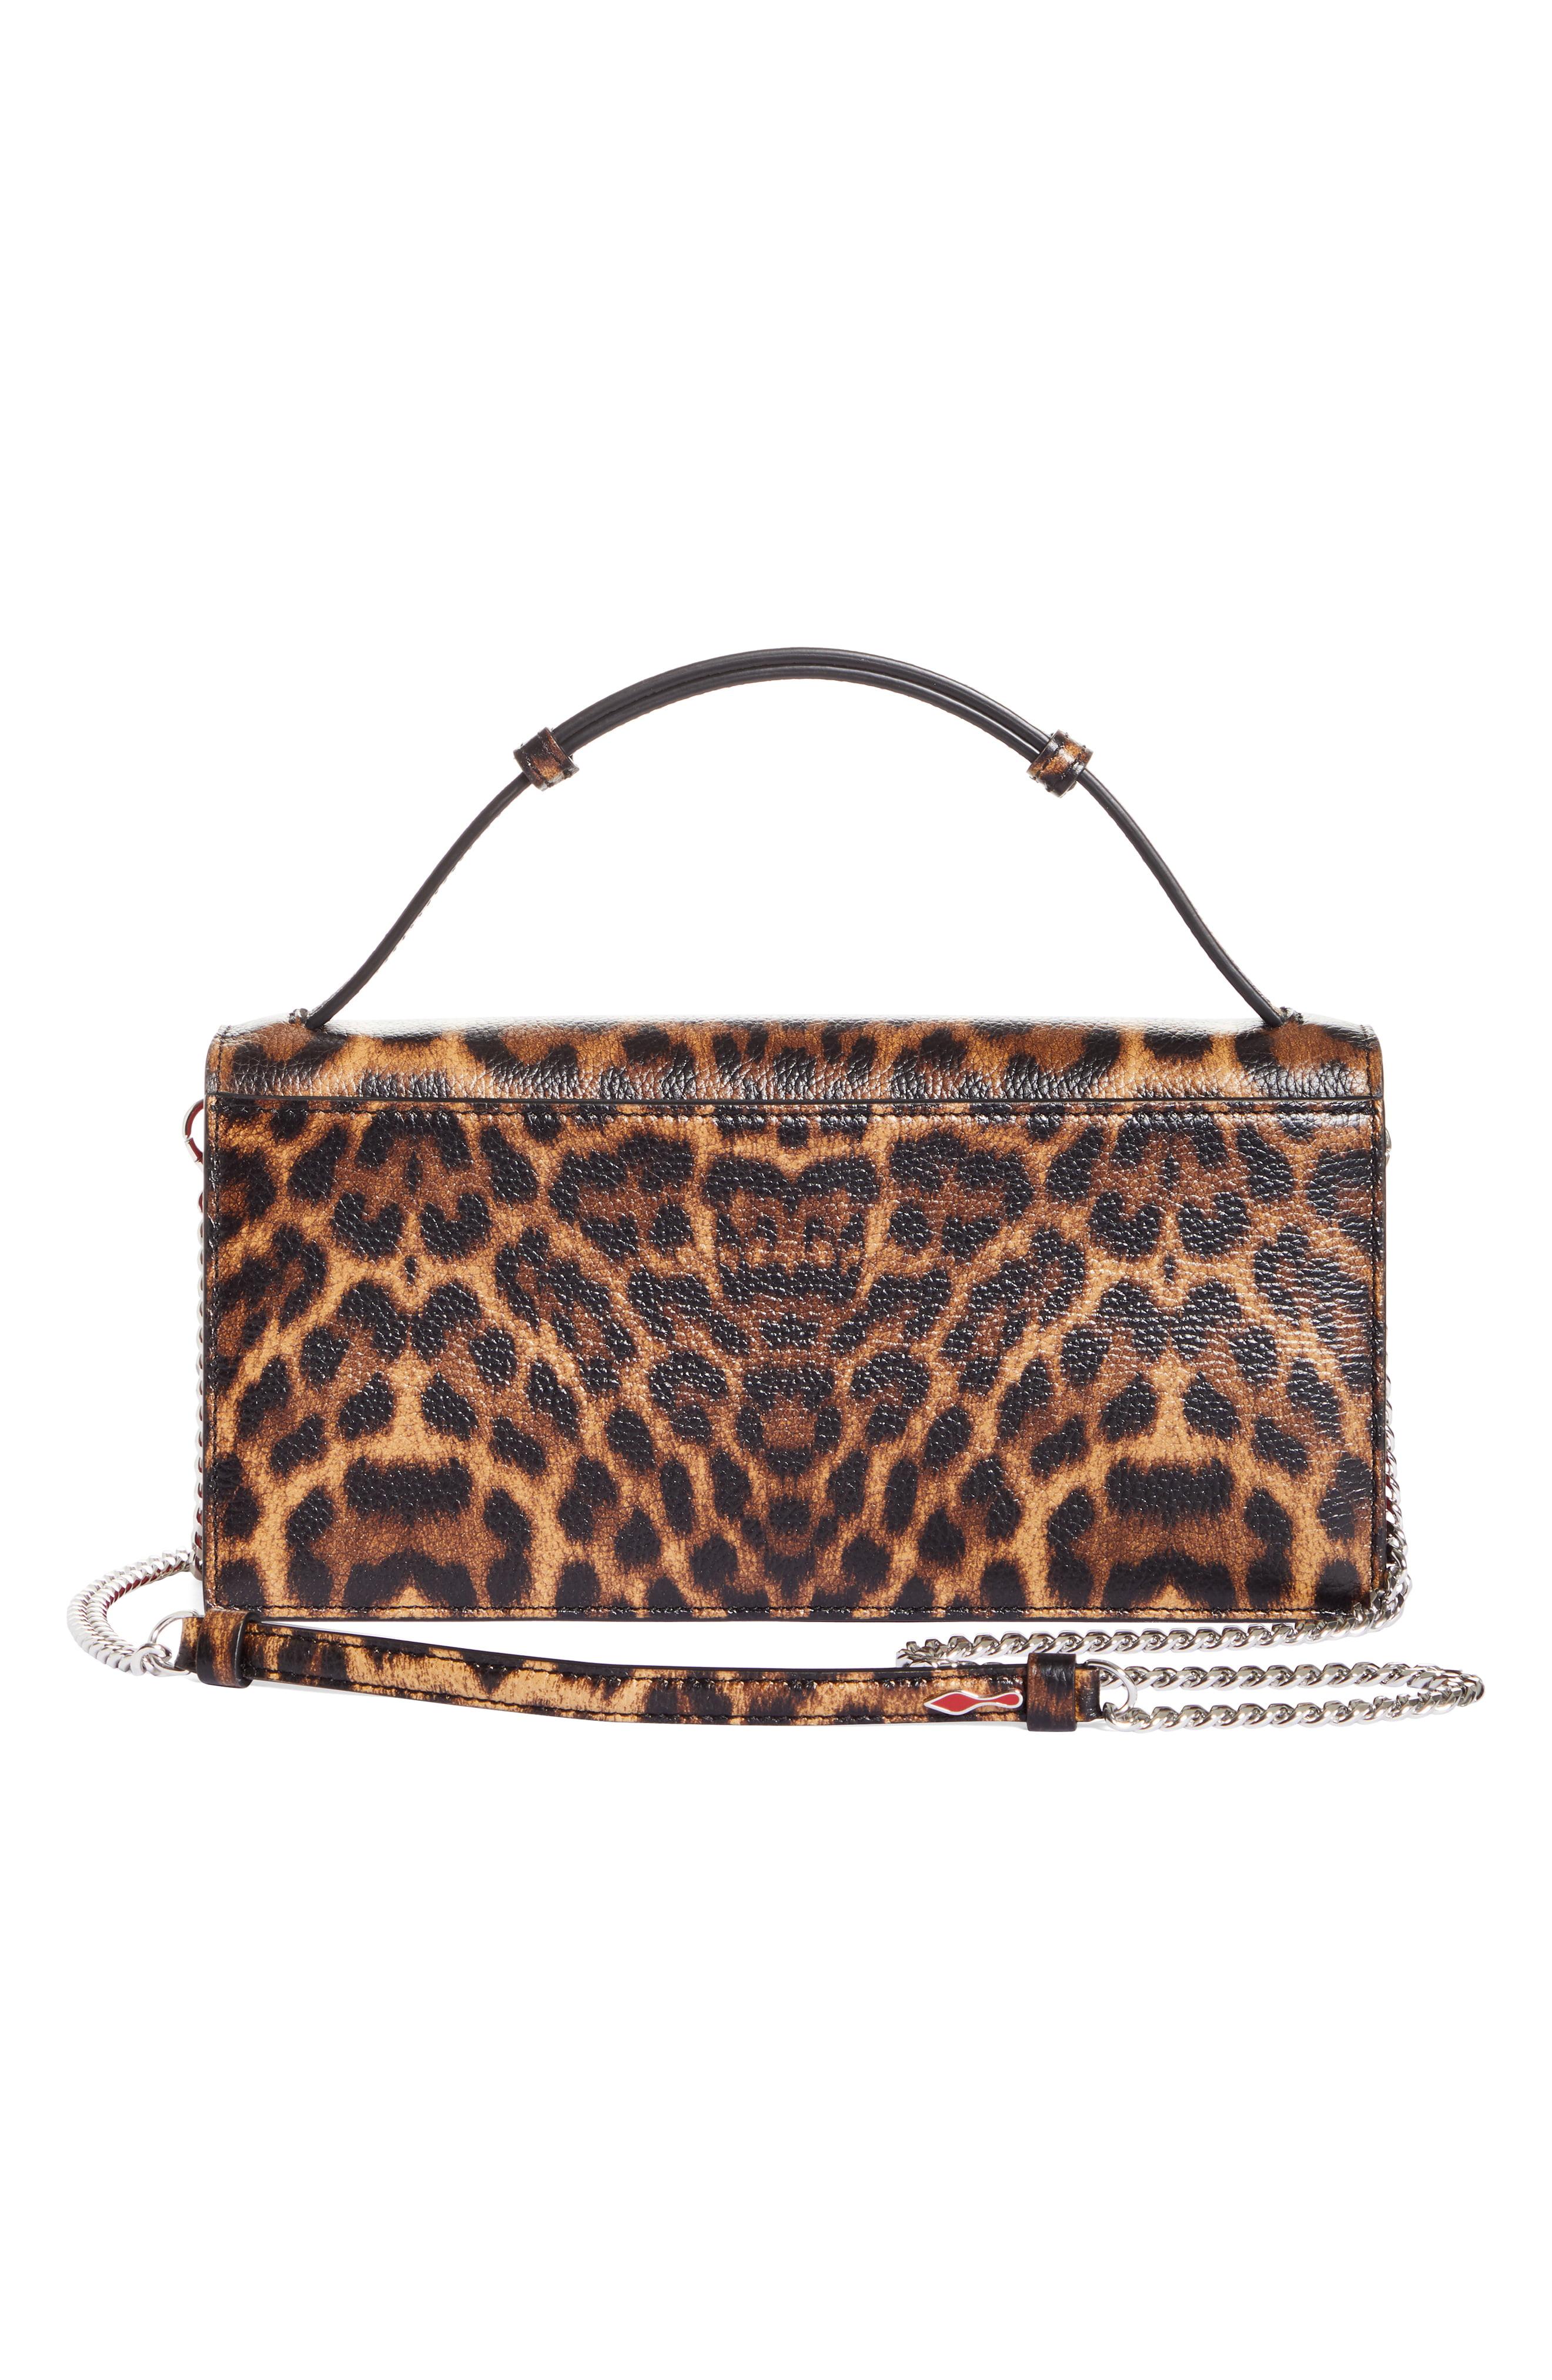 Christian Louboutin Elisa Leopard Print Leather Baguette Bag in Brown ...